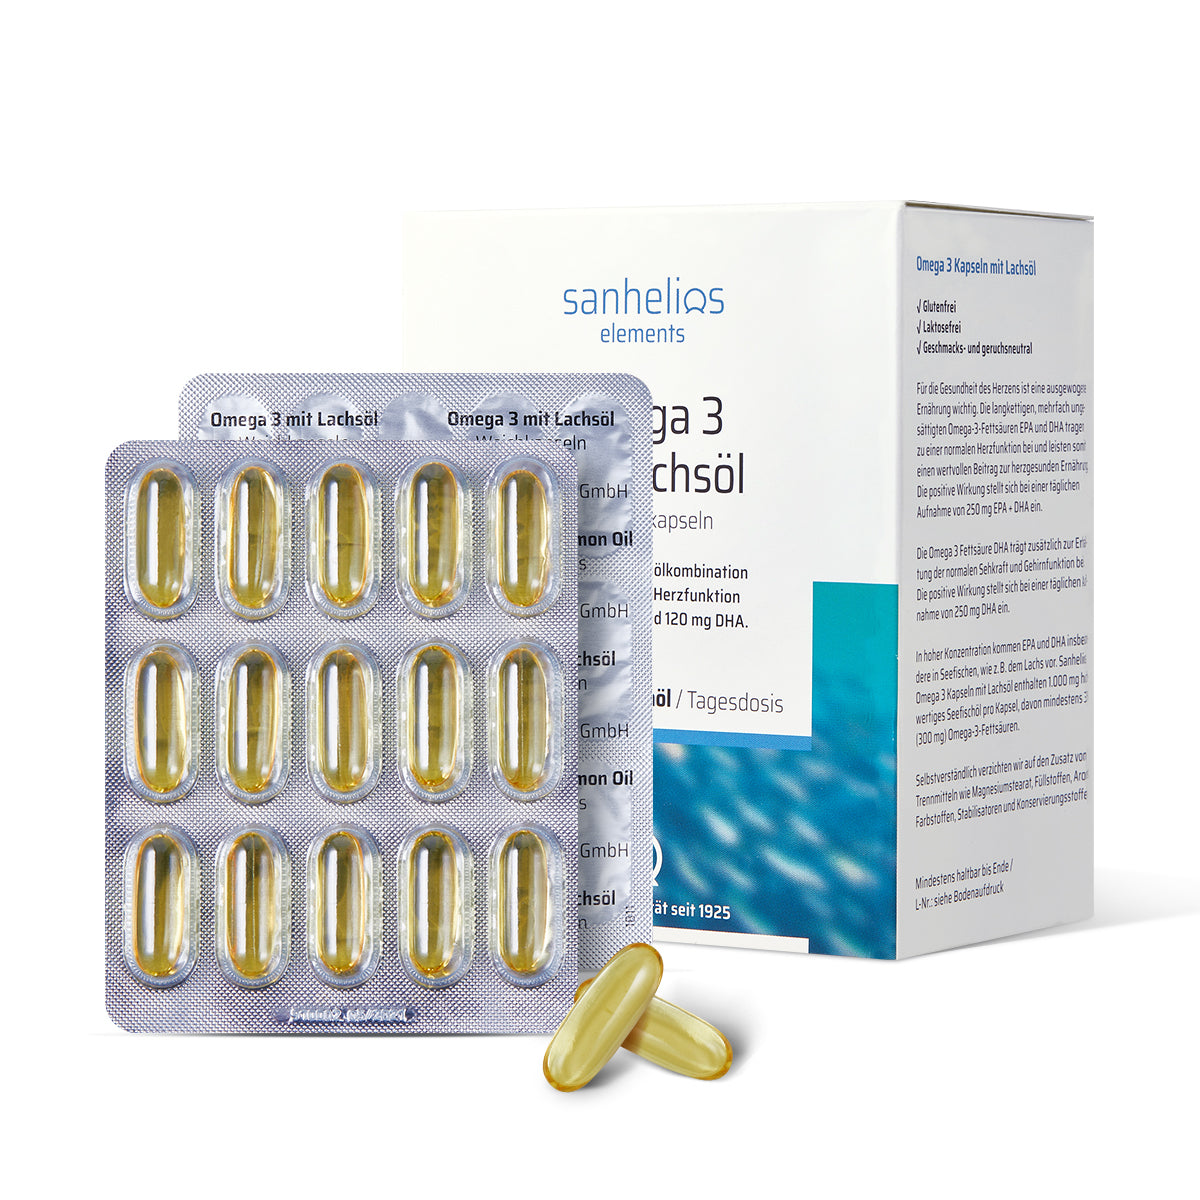 Sanhelios® OMEGA 3 1000 mg Kapseln 90 St. - Sanhelios-Shop